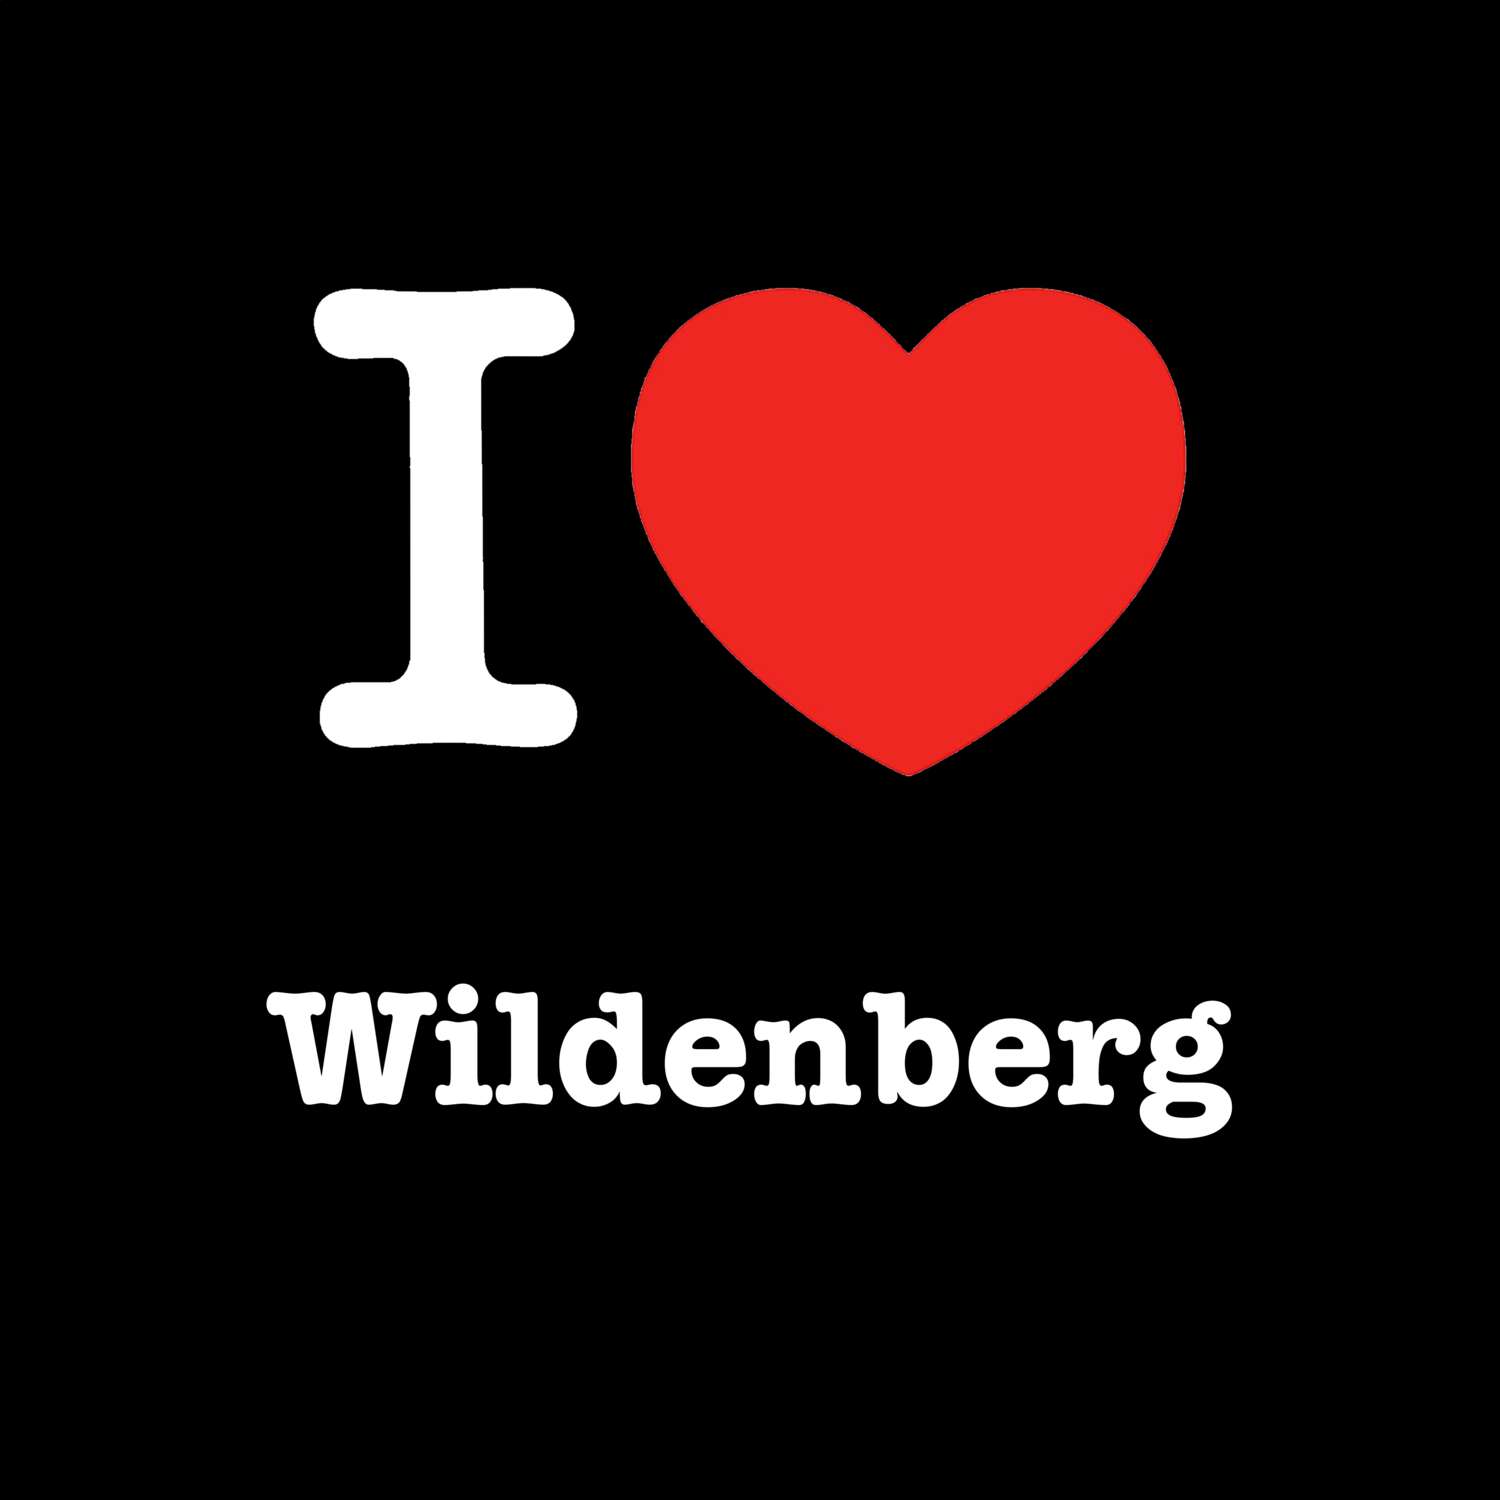 Wildenberg T-Shirt »I love«